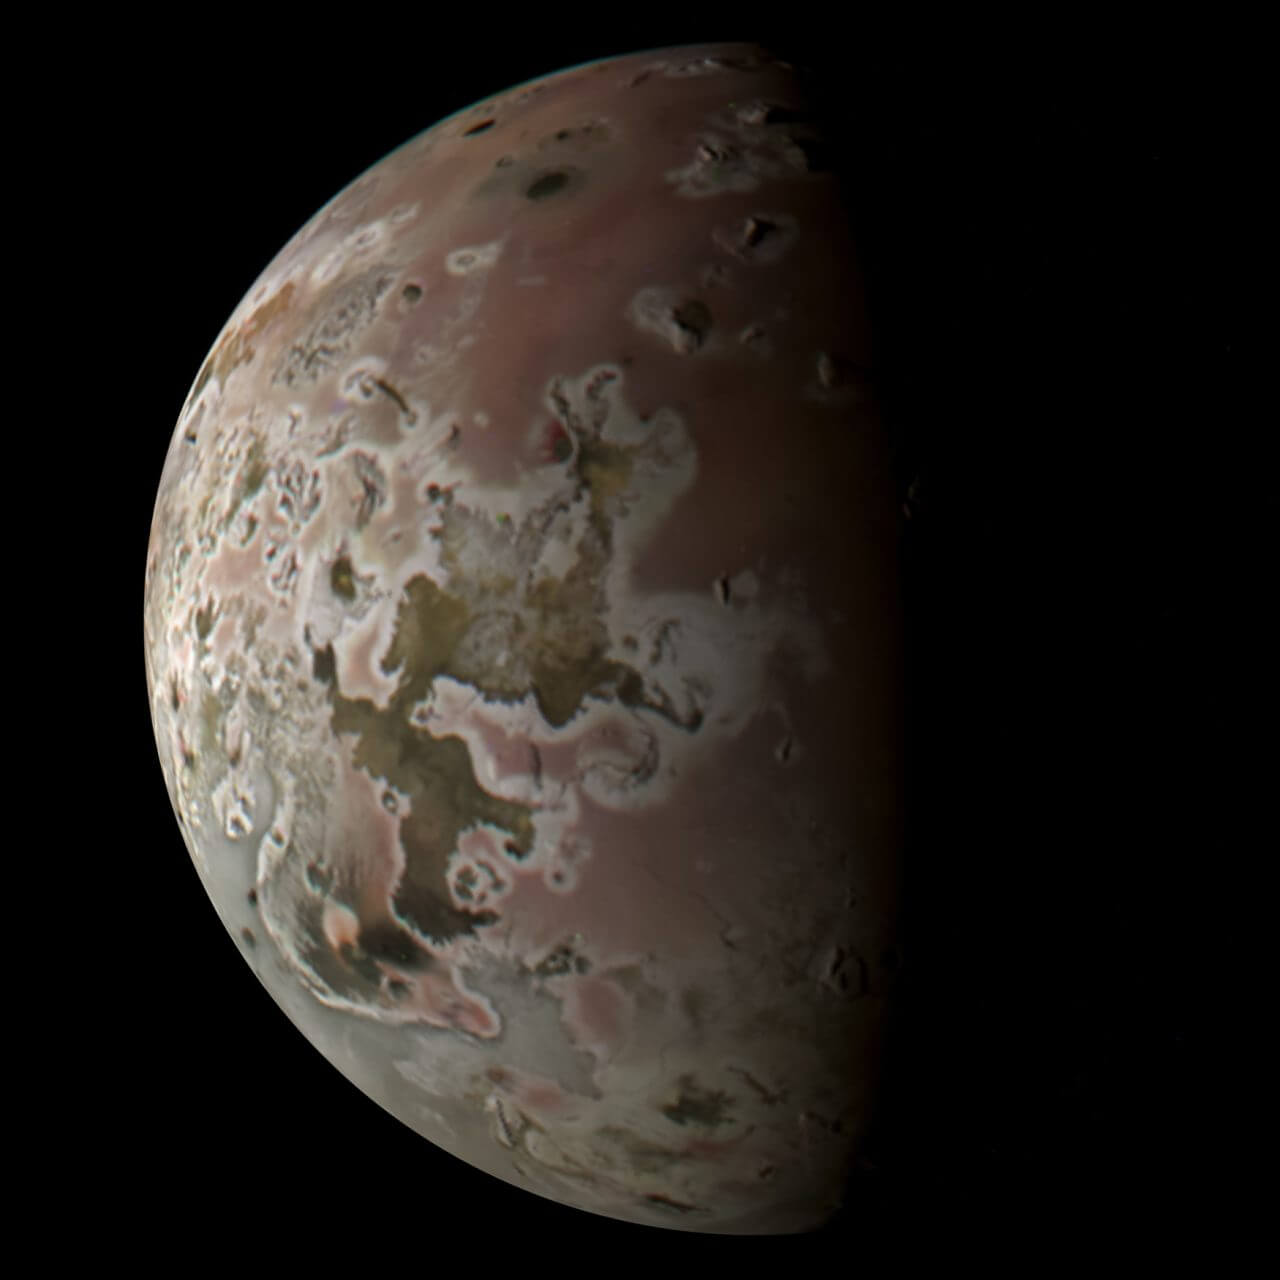 NASA木星探査機ジュノーが撮影した衛星イオの最新画像